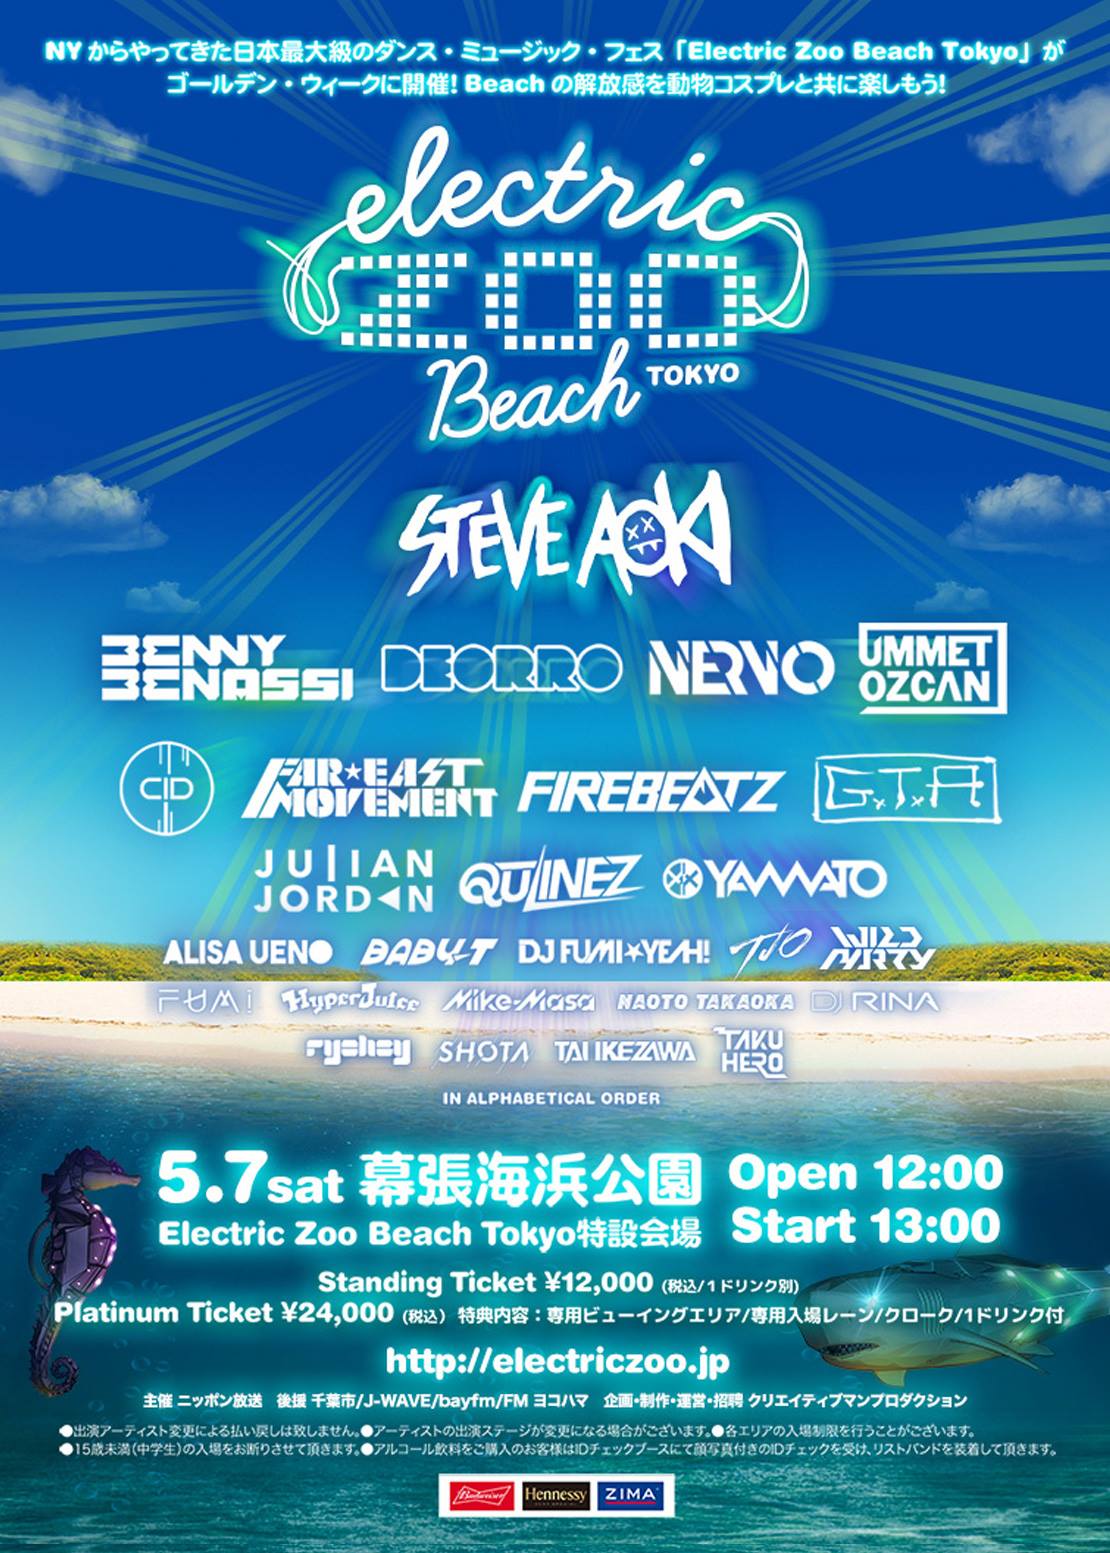 Electric Zoo Beach Tokyo 2016 final lineup